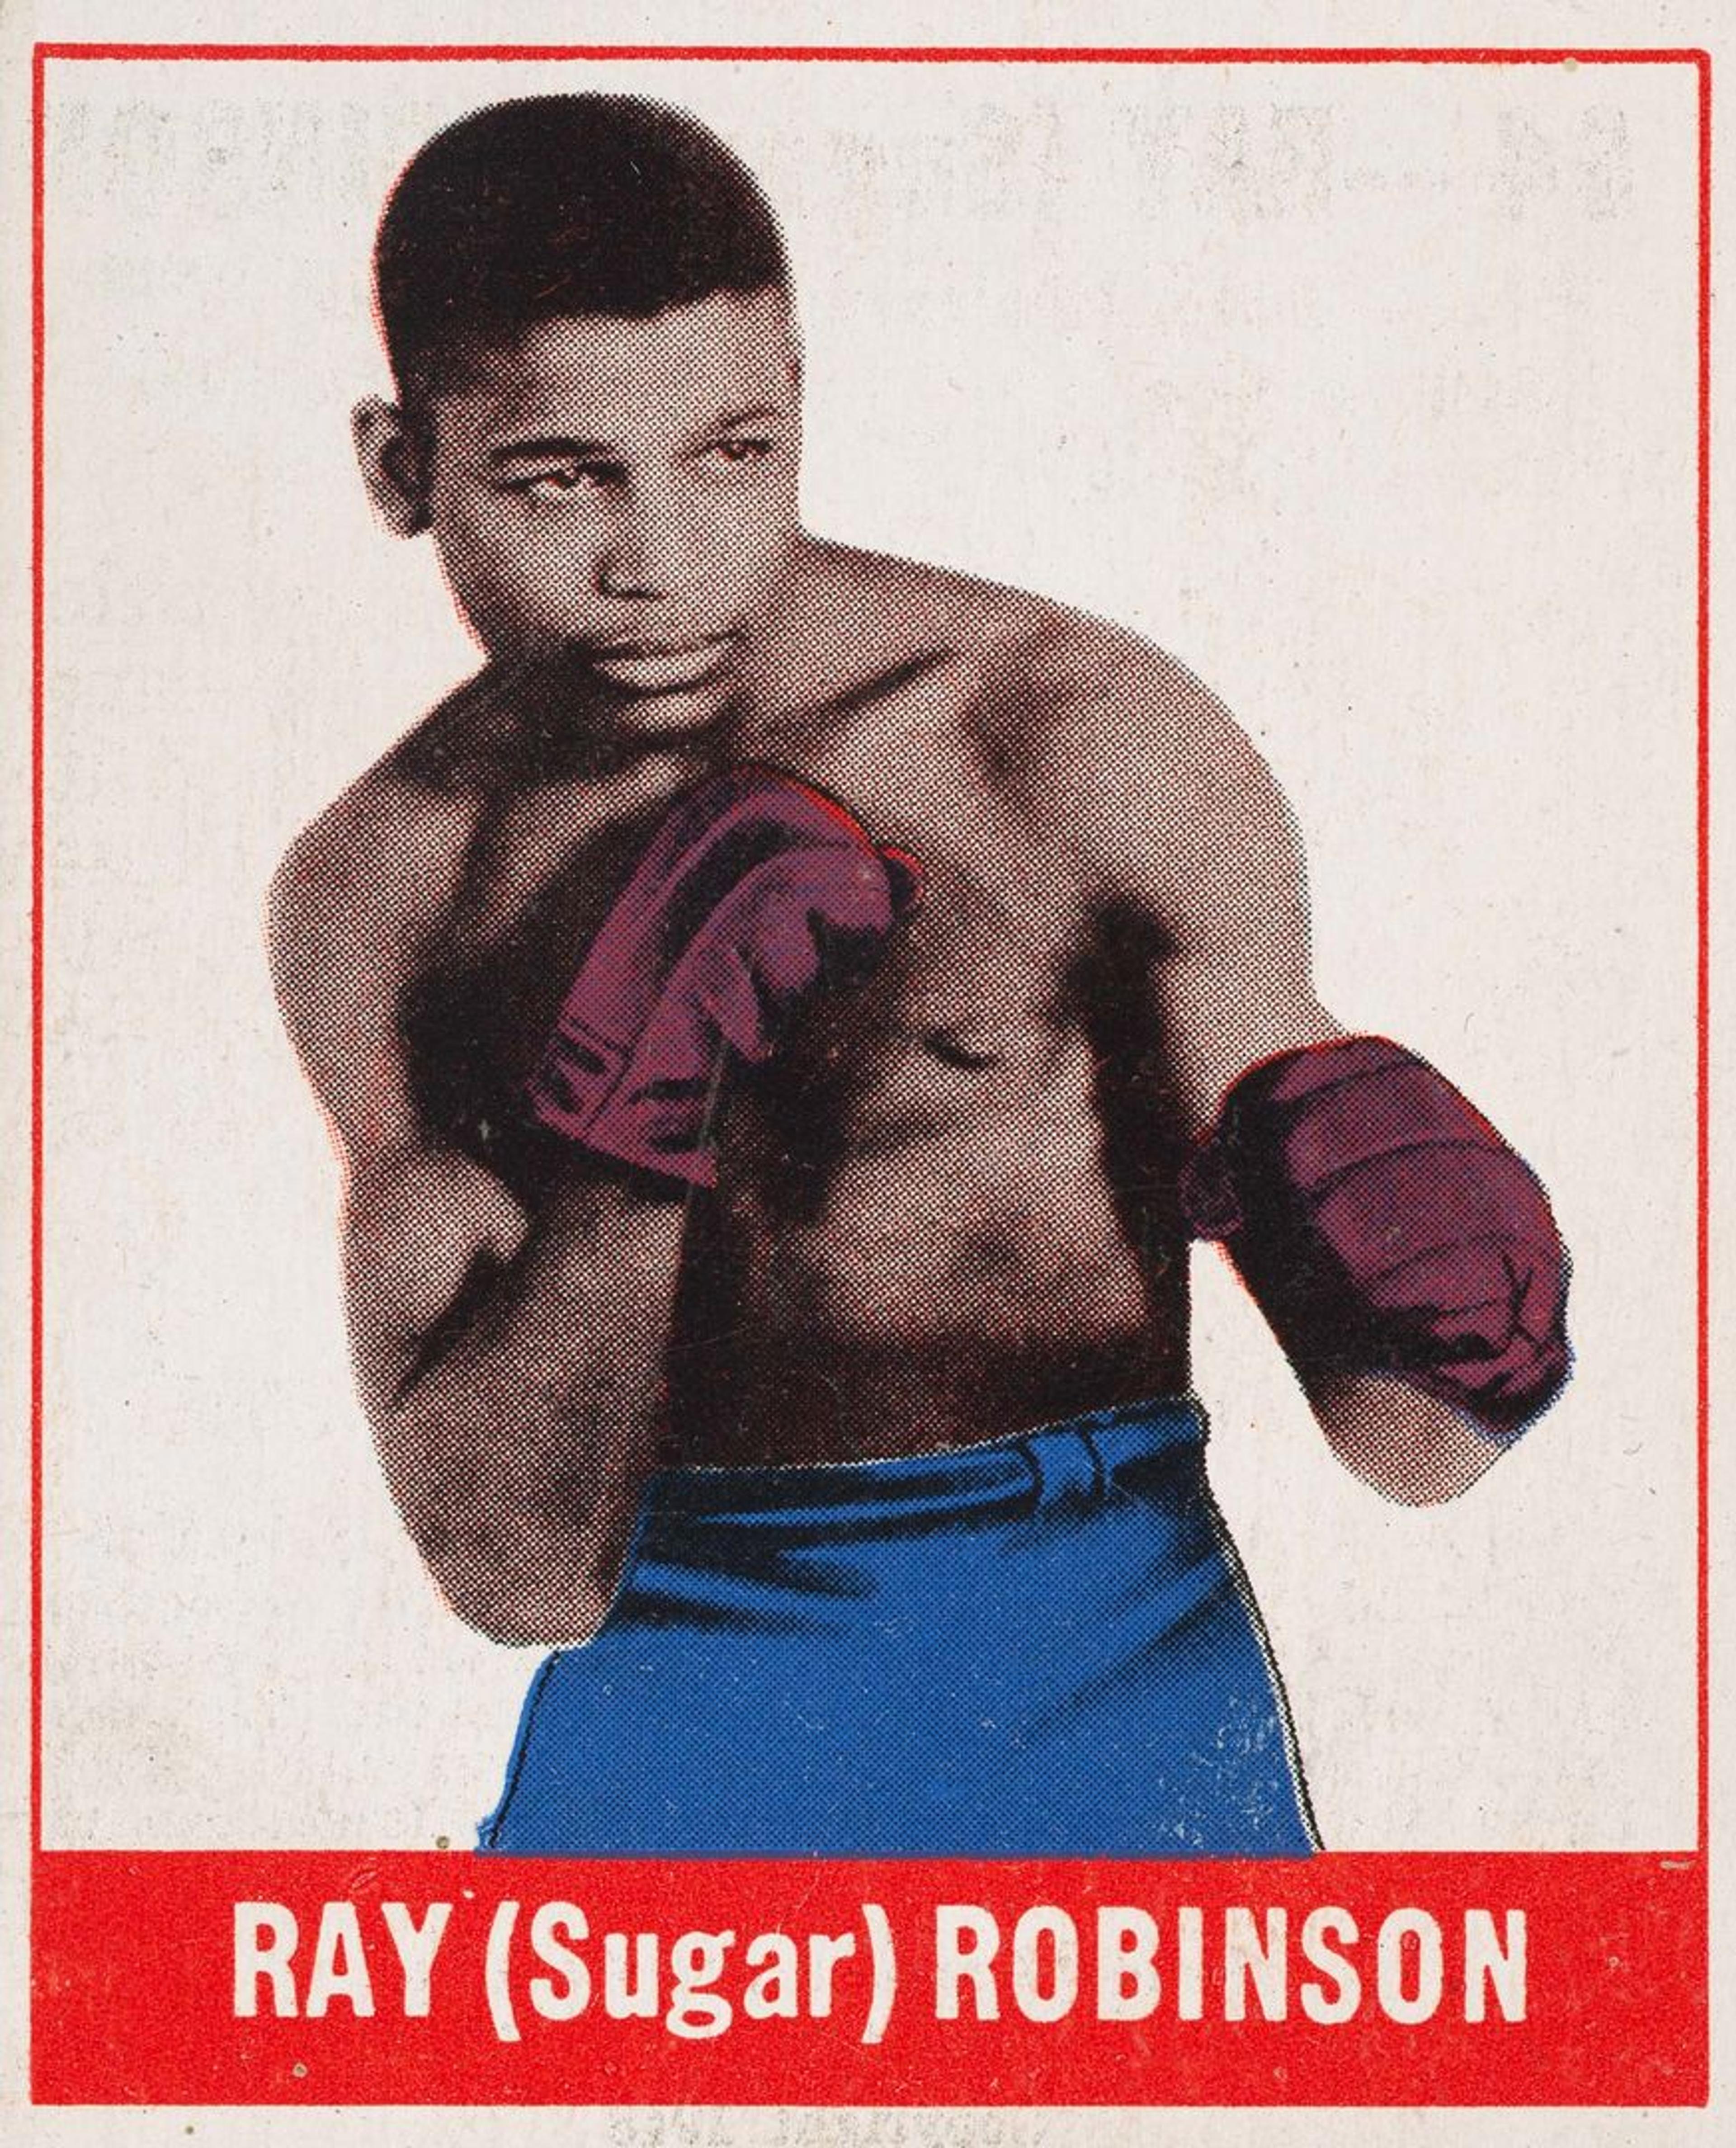 1948 boxing card featuring Ray (Sugar) Robinson